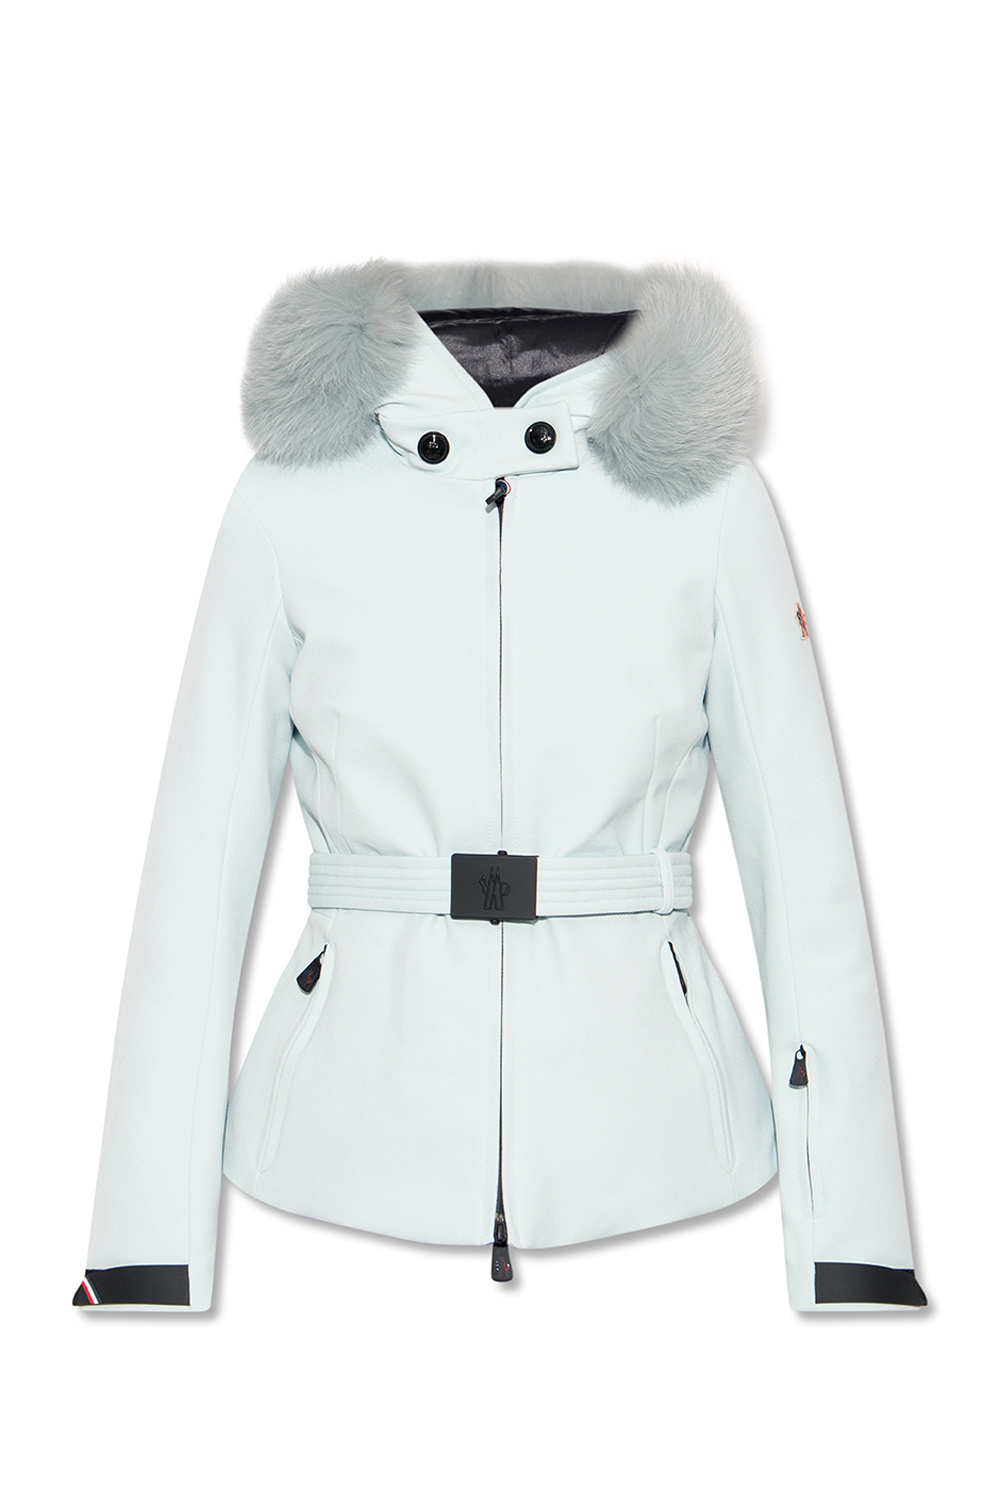 Moncler Grenoble 'Bauges' ski jacket | Women's Clothing | Vitkac